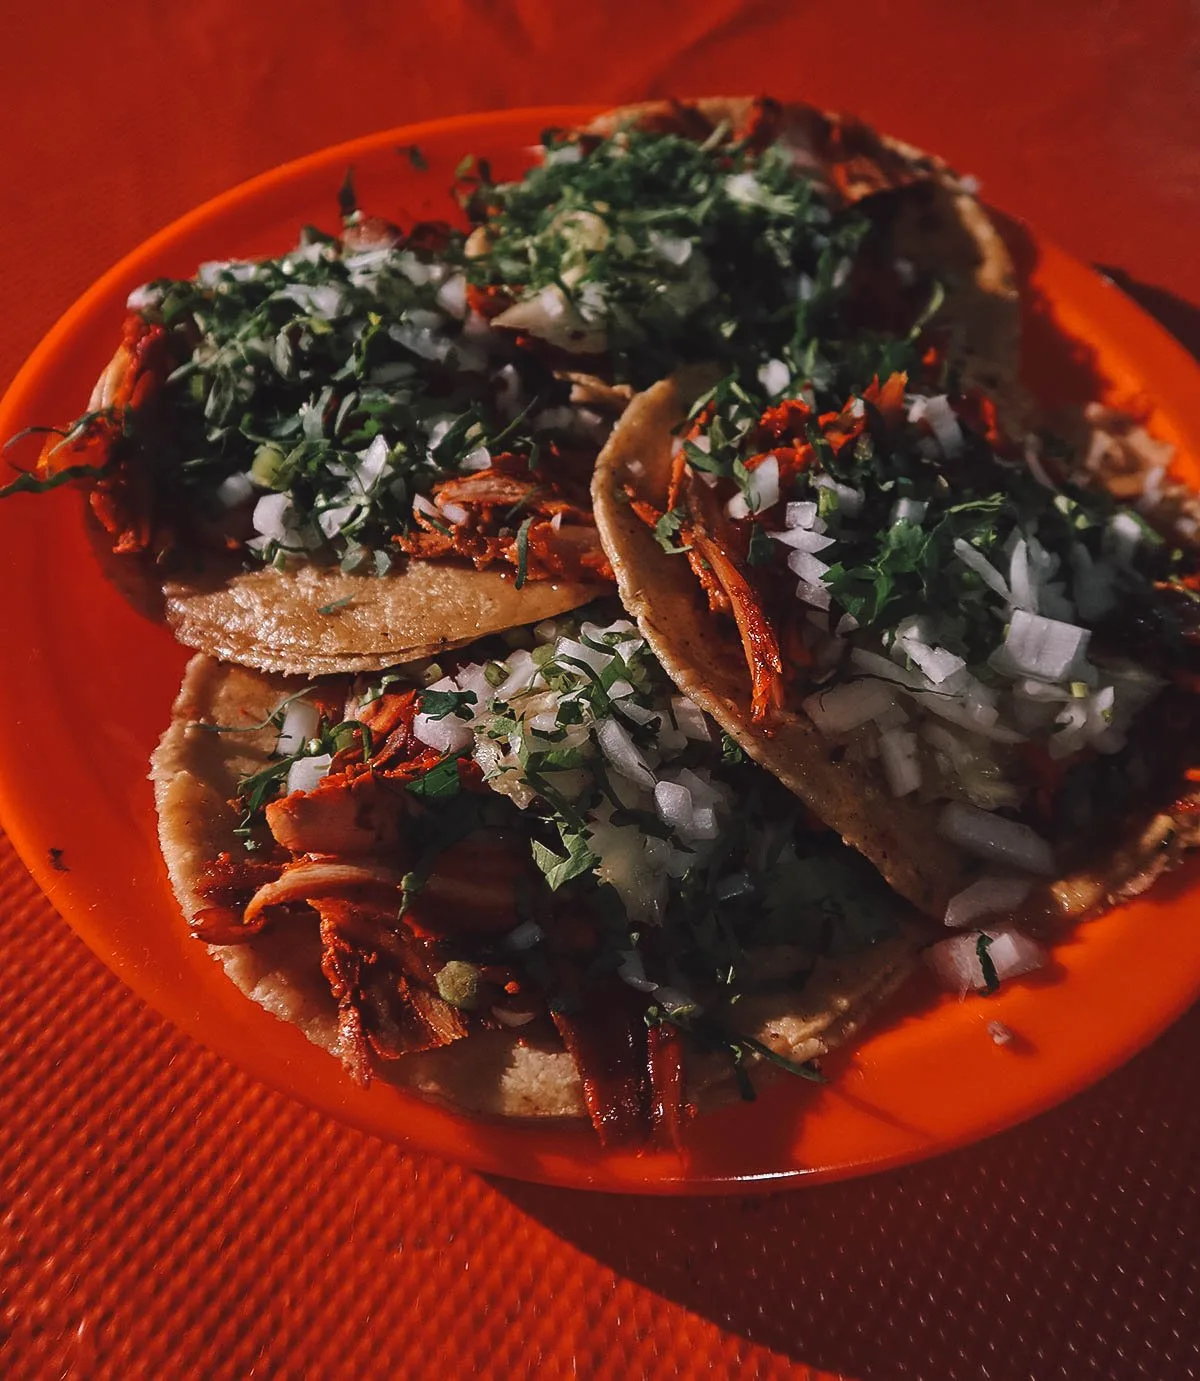 Plate of al pastor tacos